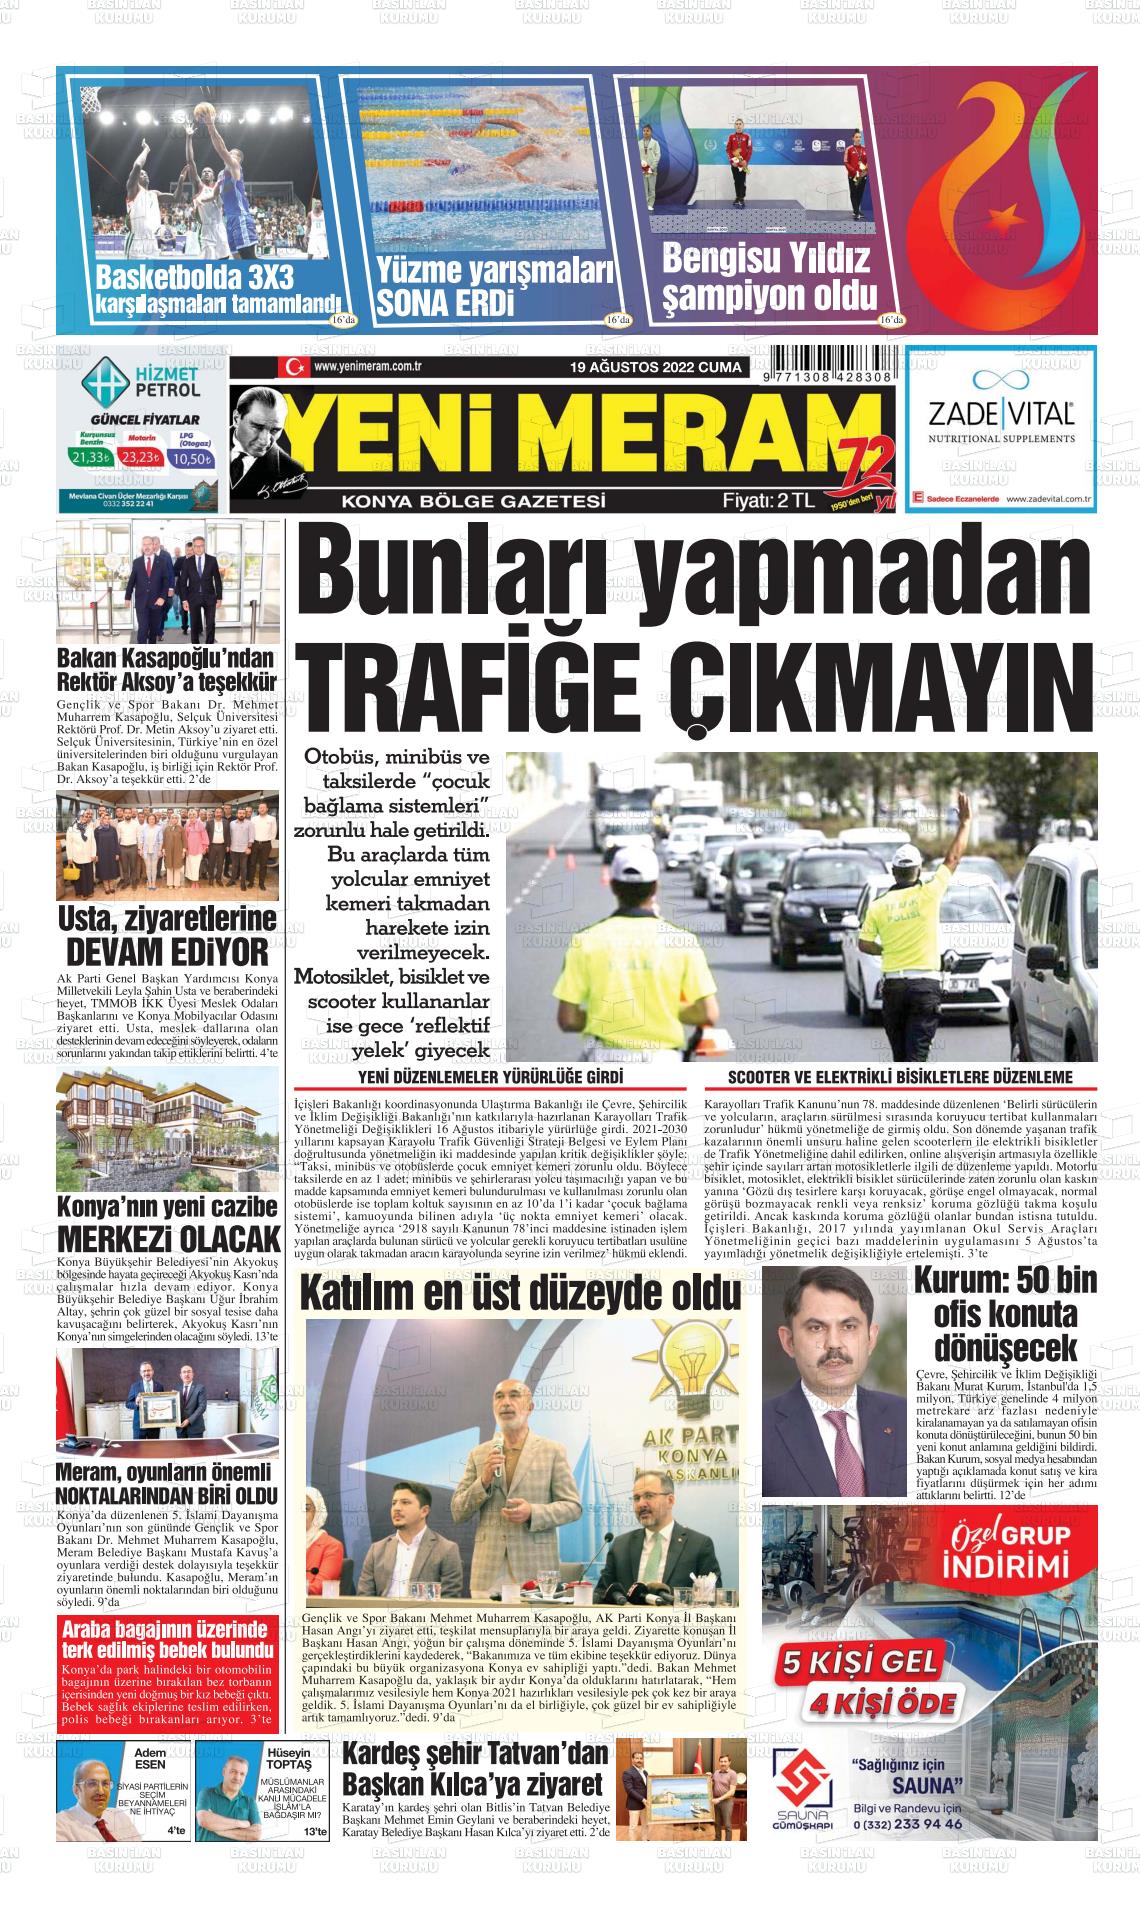 19 Ağustos 2022 Yeni Meram Gazete Manşeti